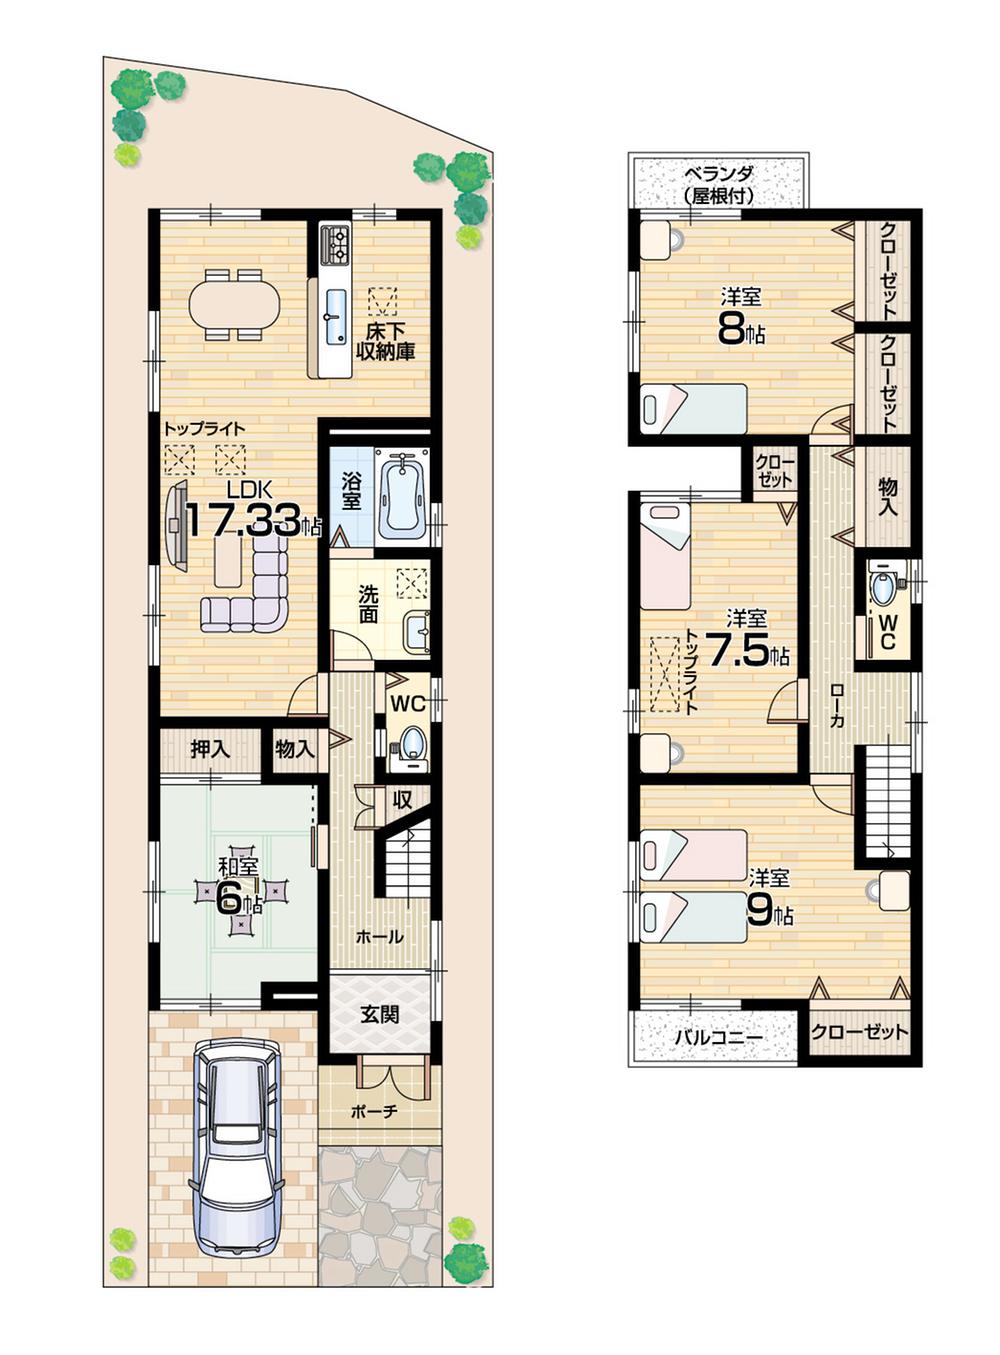 Floor plan. (No. 8 locations), Price 28.8 million yen, 4LDK, Land area 104.57 sq m , Building area 115.02 sq m